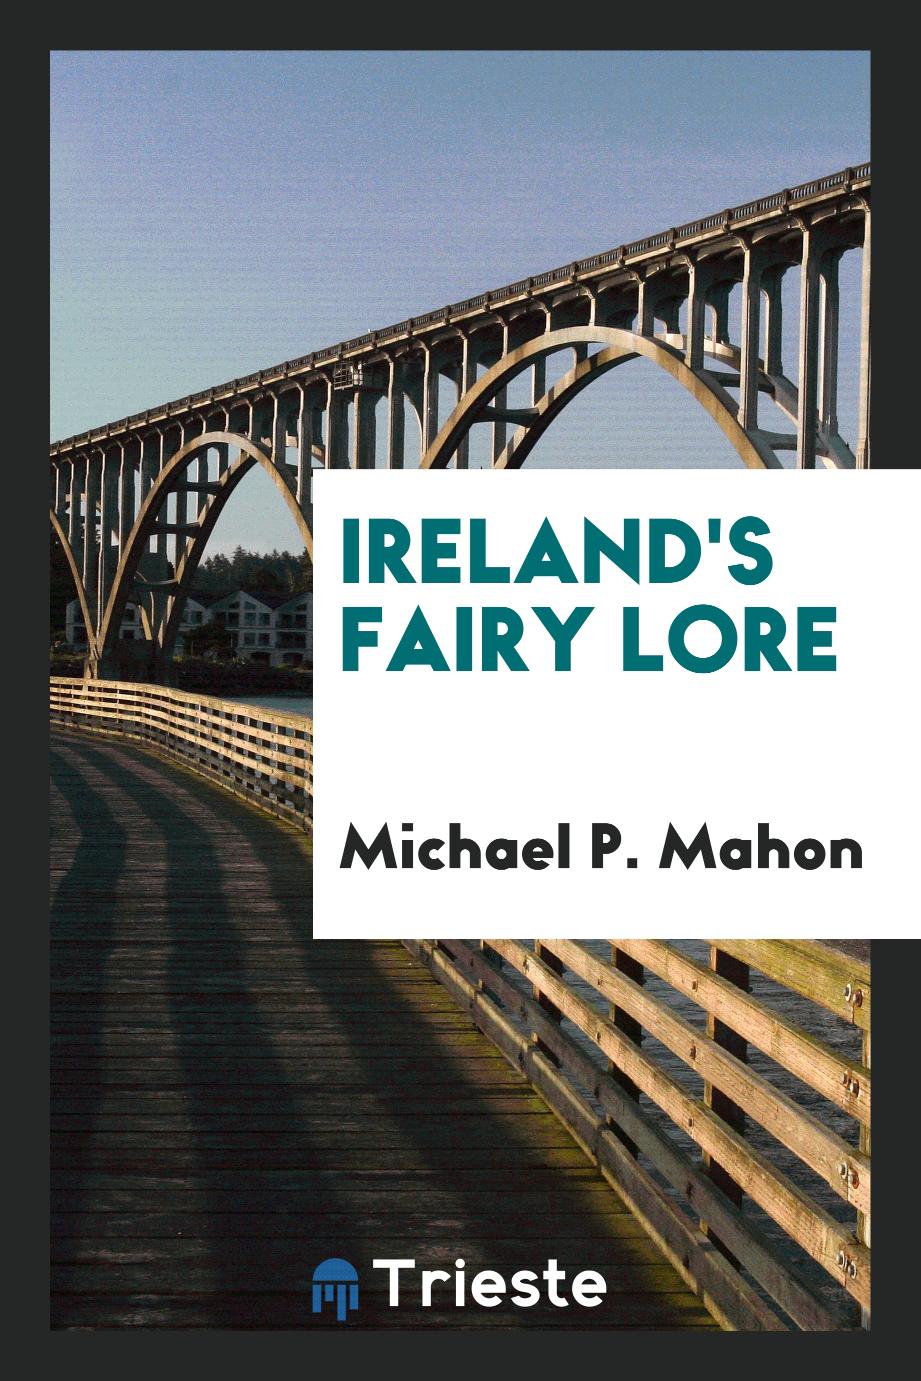 Ireland's fairy lore